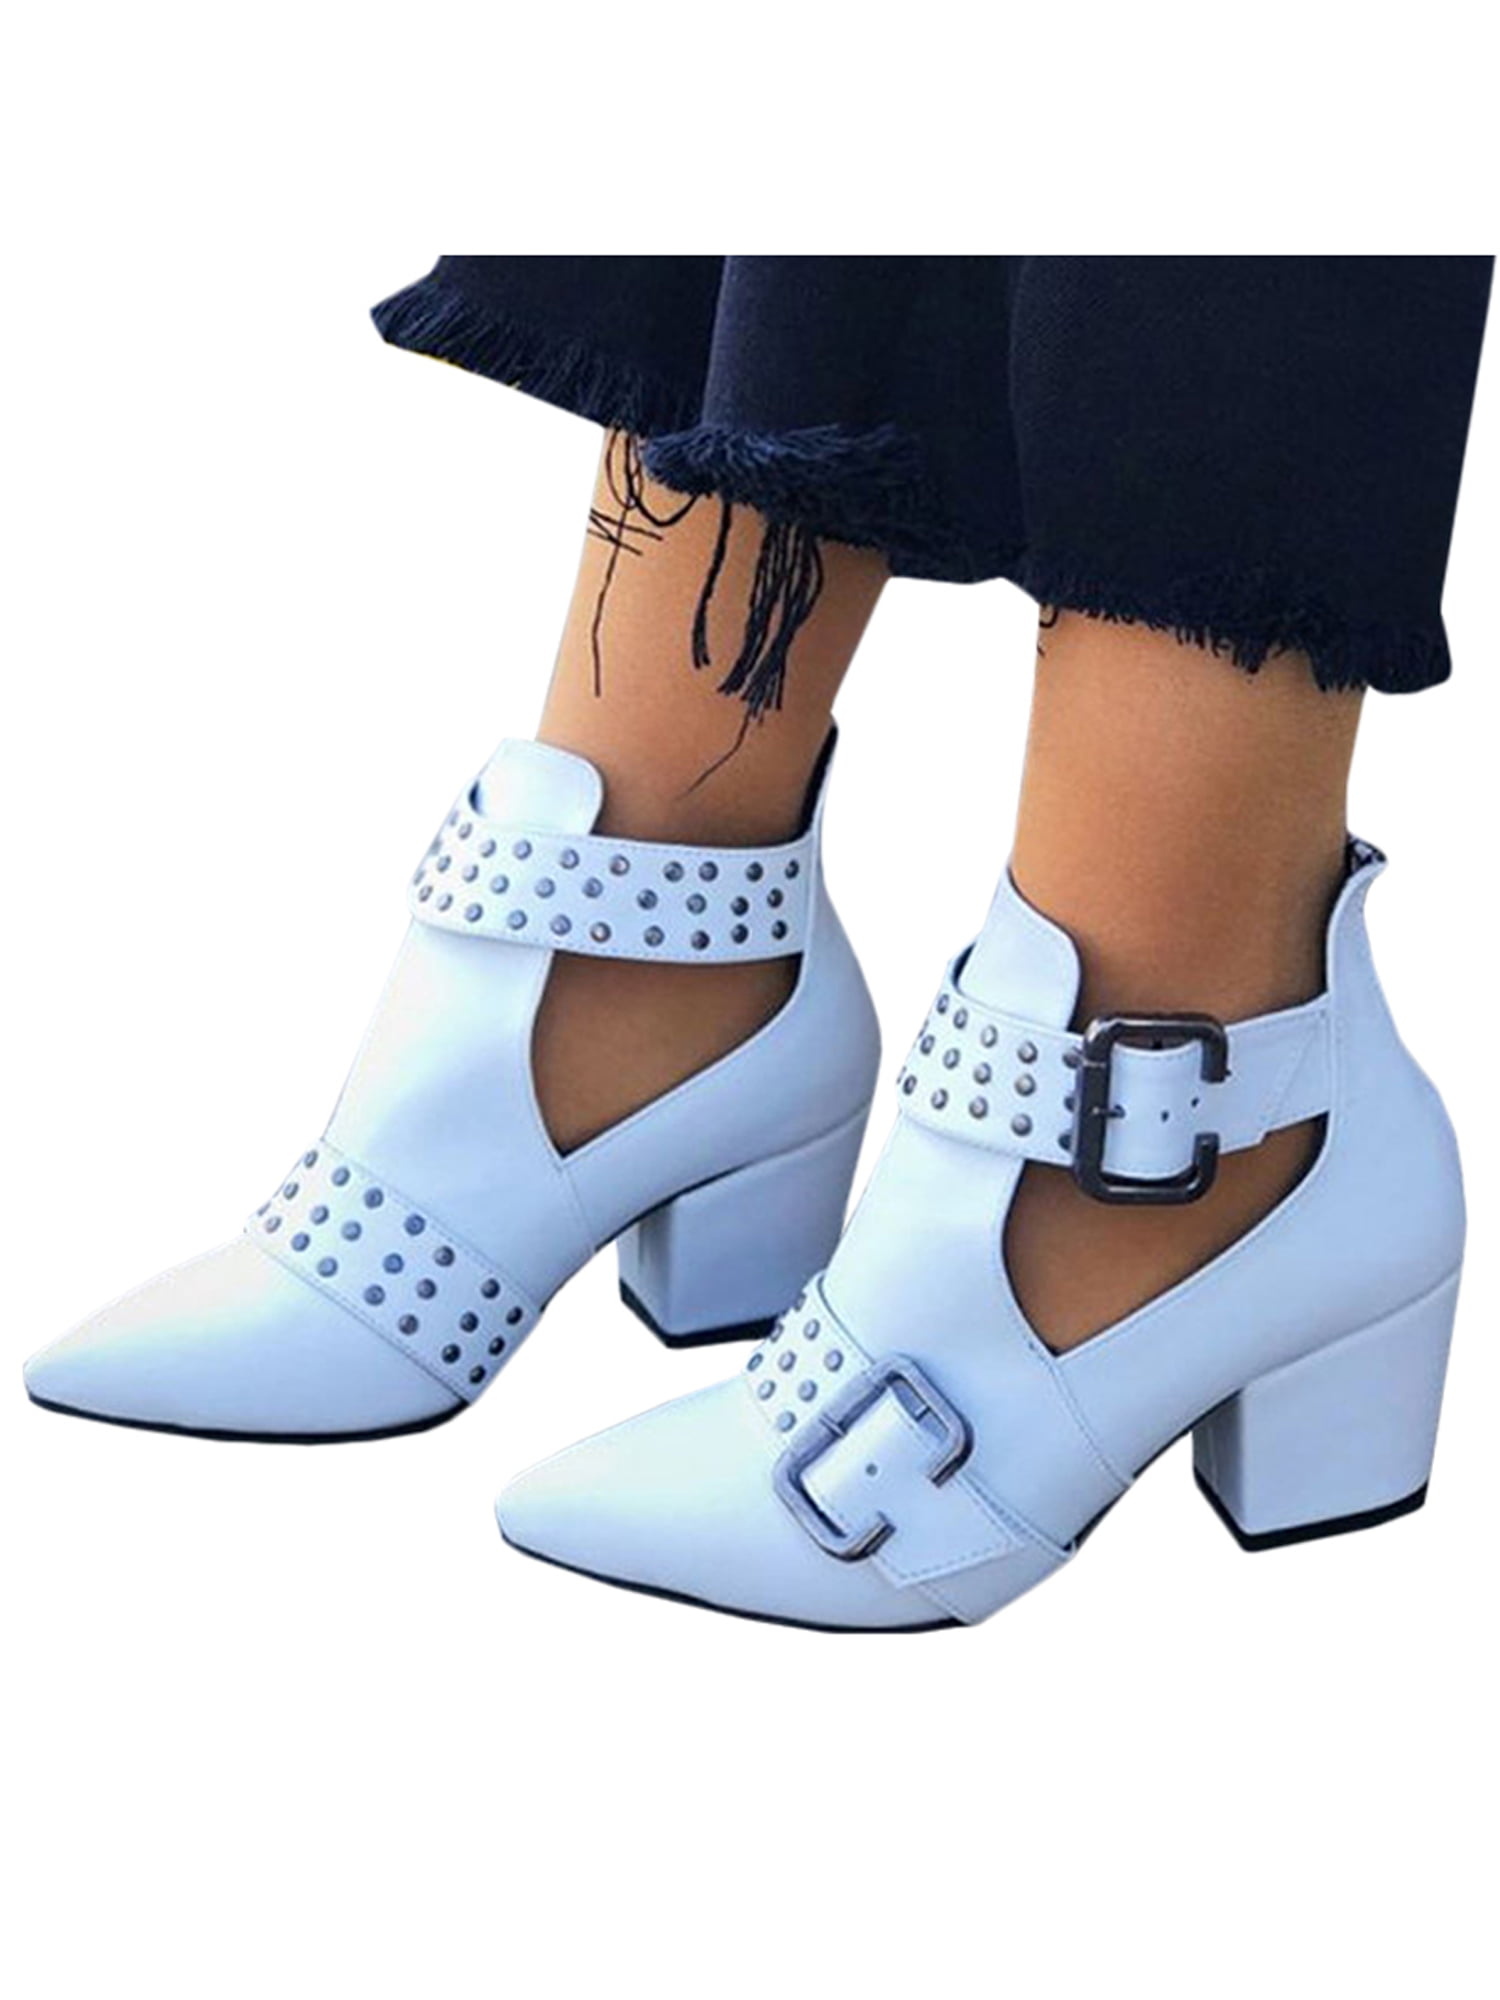 Women Low Mid Block Heel Ankle Boots Buckle Strap Smart Rivet Booties Shoes Size